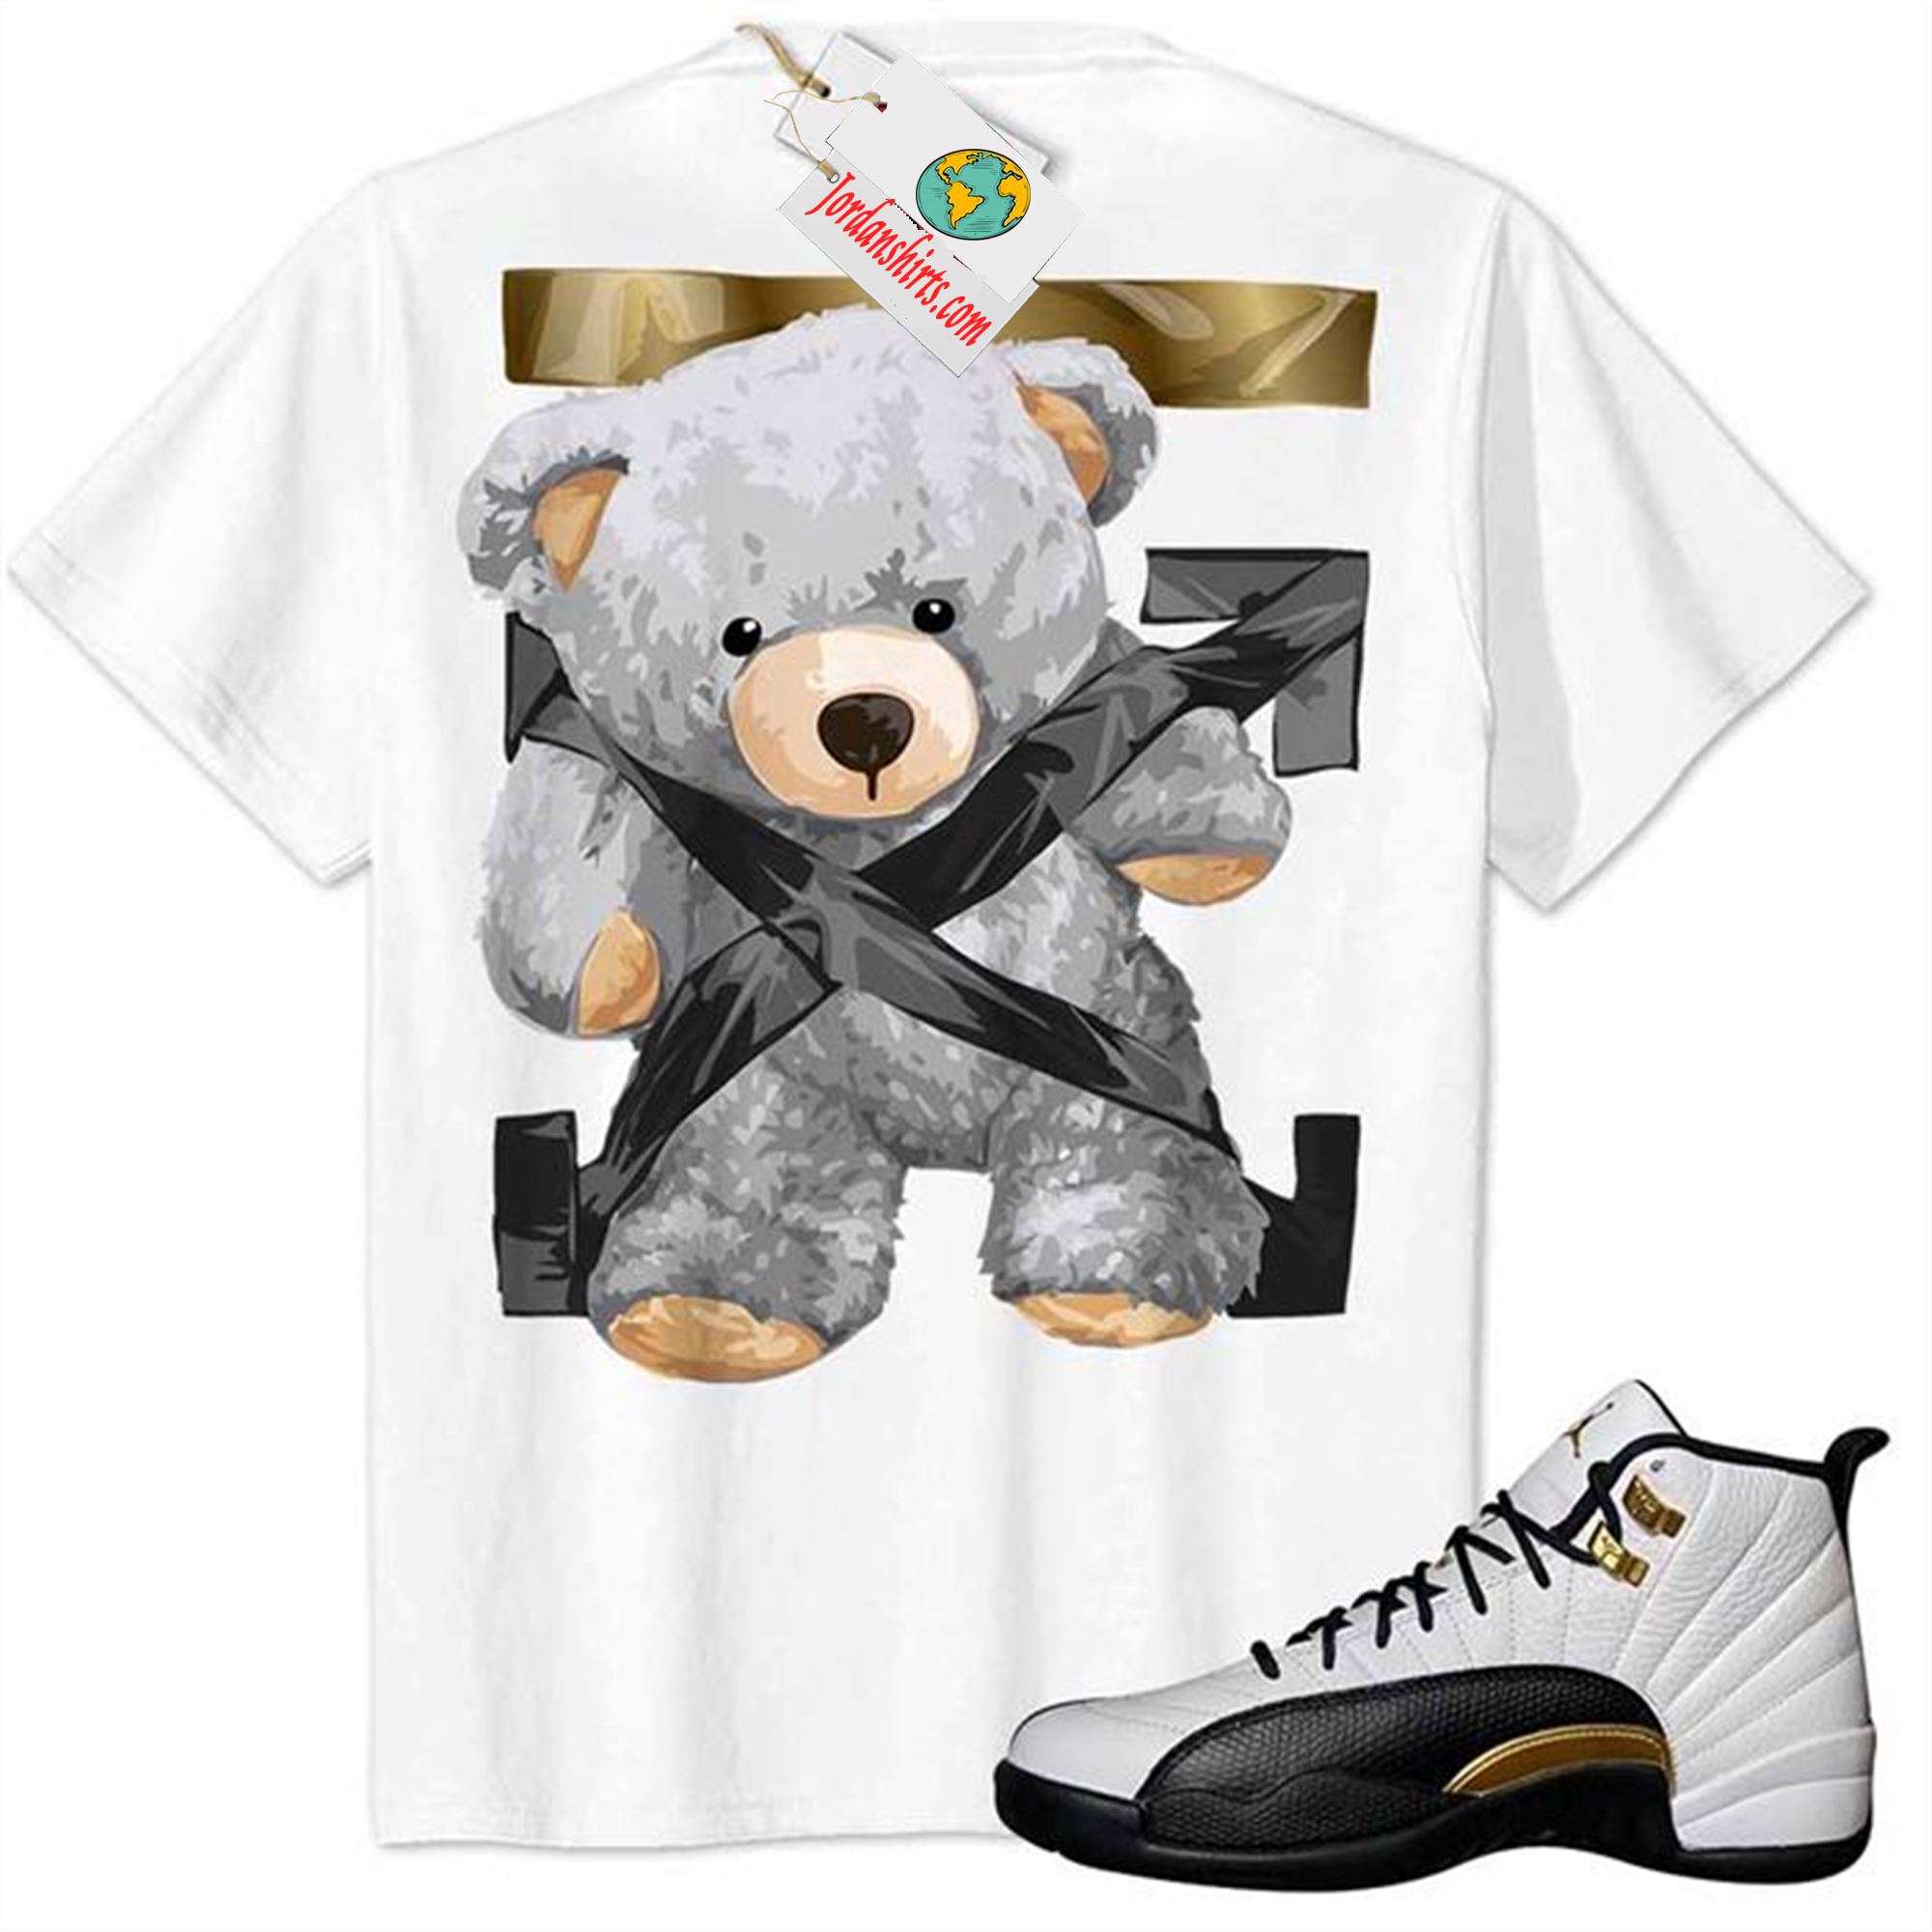 Jordan 12 Shirt, Teddy Bear Duck Tape Backside White Air Jordan 12 Royalty 12s Size Up To 5xl